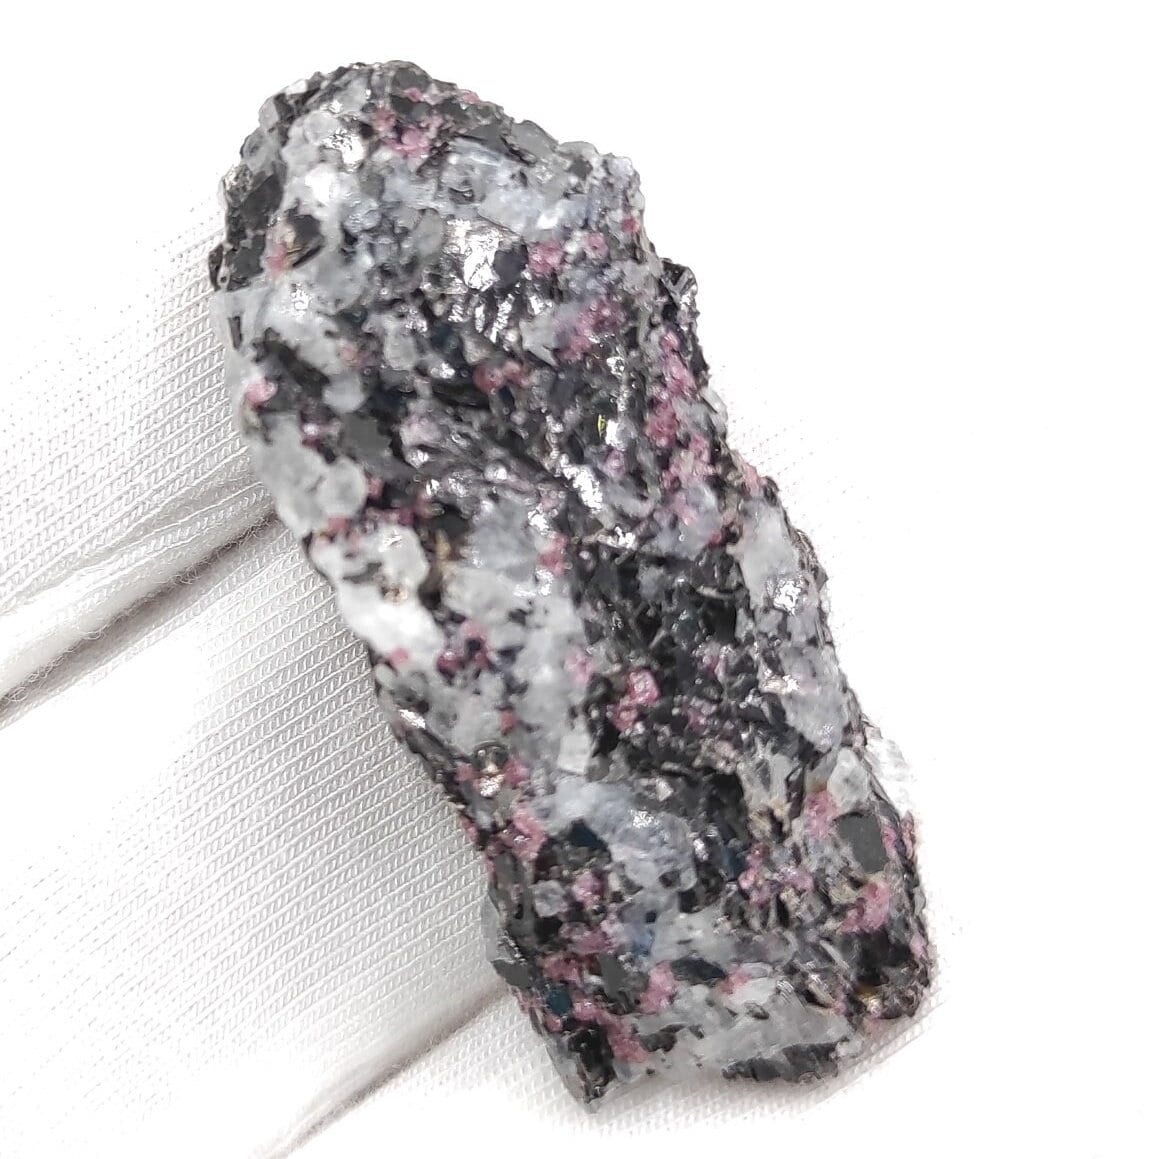 7.63g Kyanite in Gneiss with Almadine Garnet - Khit Ostrov, Northern Karelia, Russia - Thumbnail Mineral Specimen - Blue Kyanite Crystal